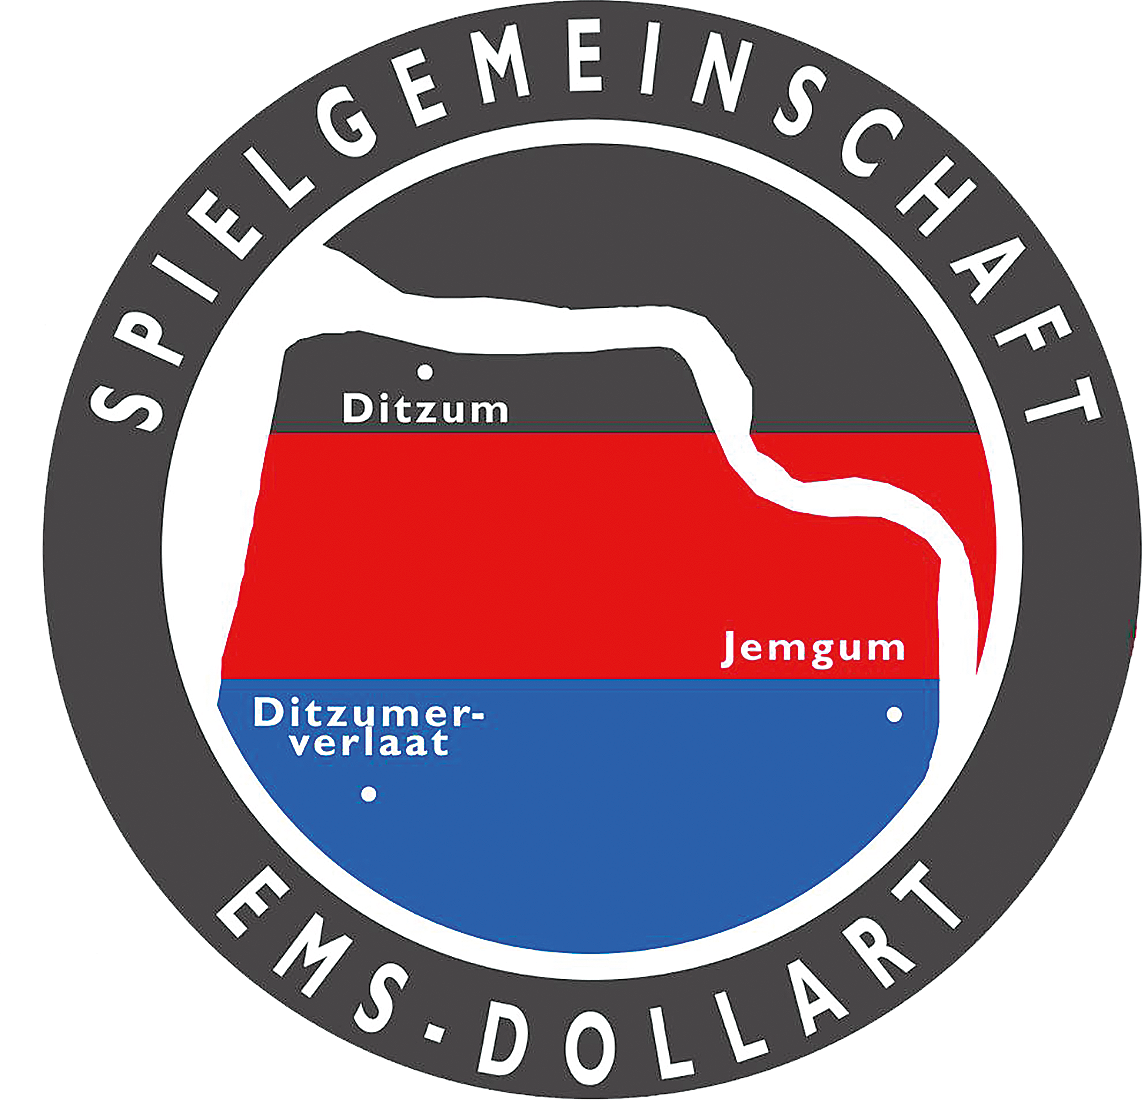 SG Ems-Dollart